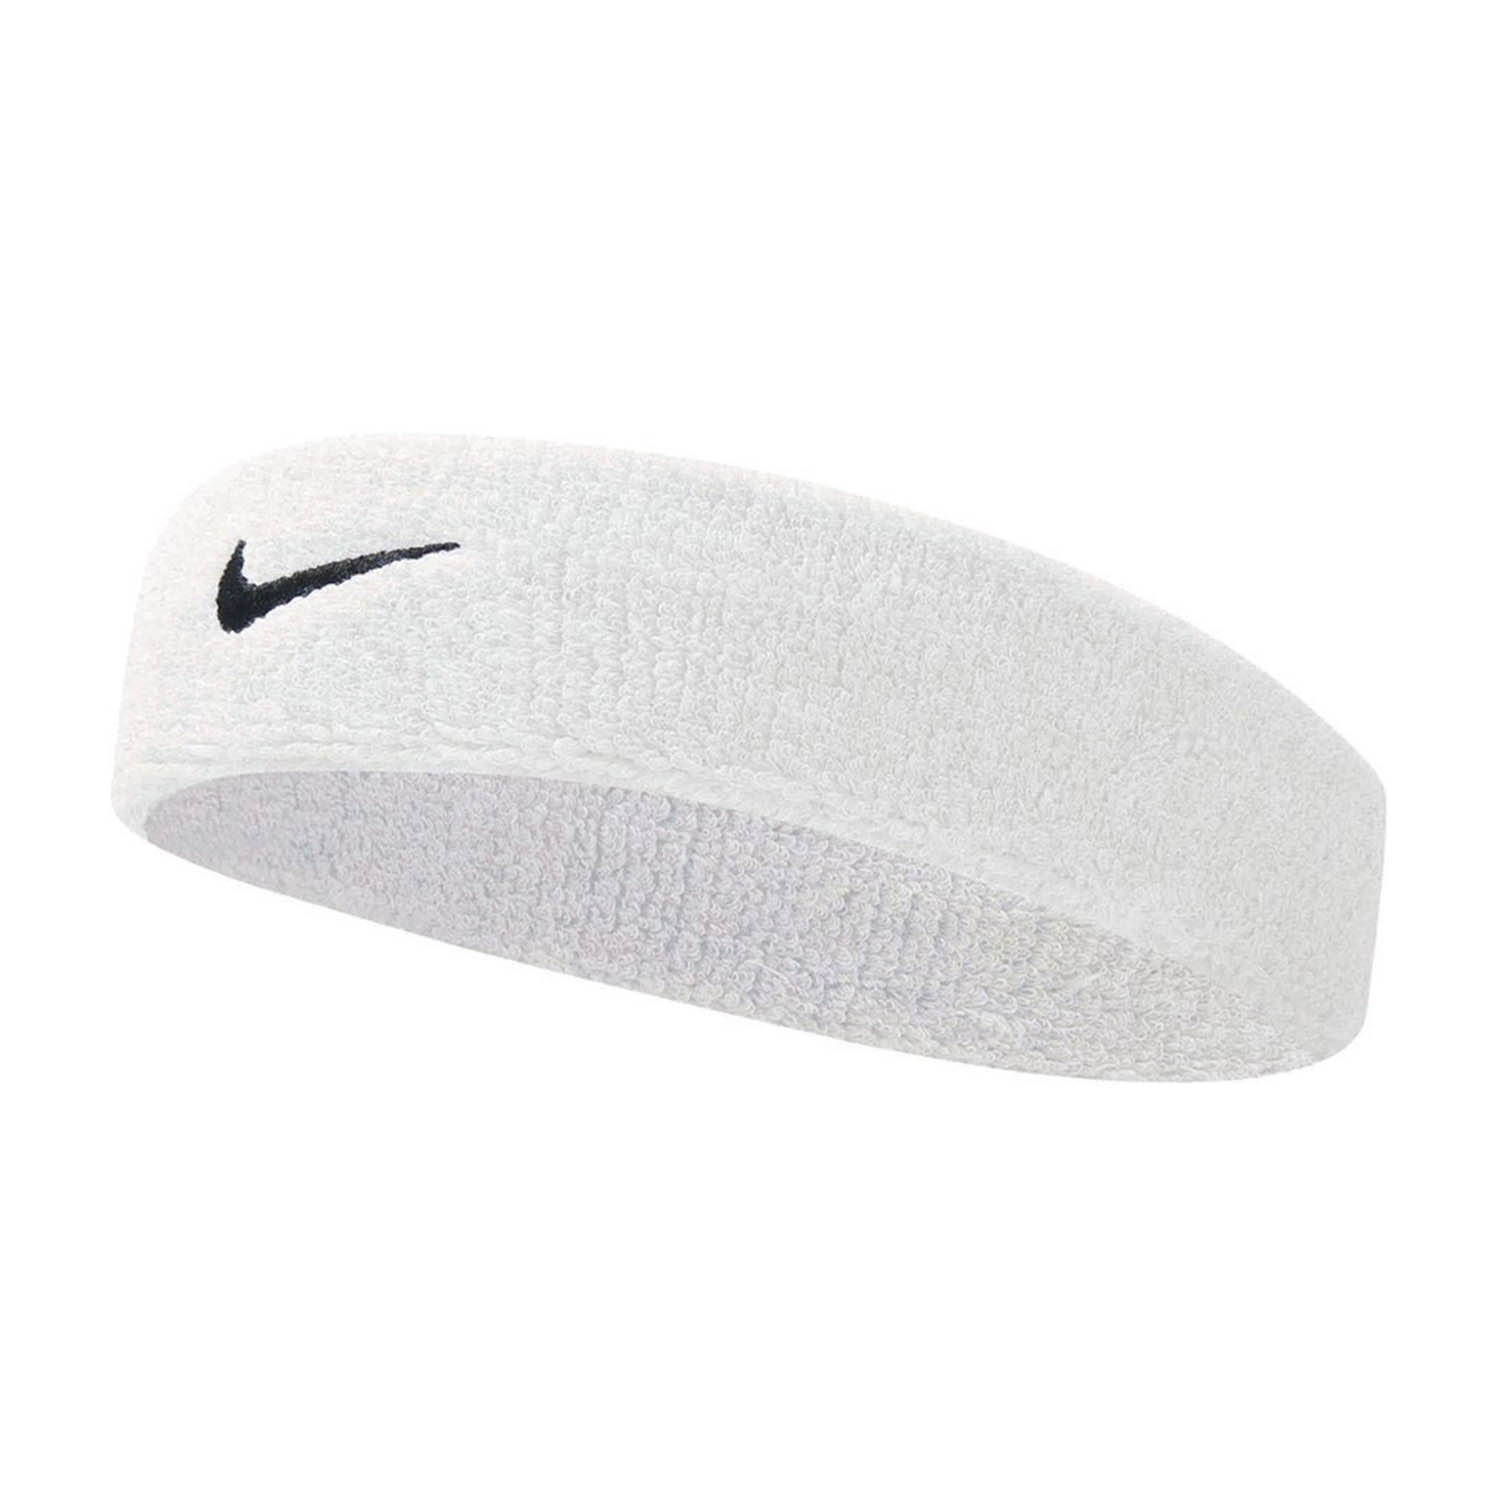 Nike Swoosh Headband - White/Black